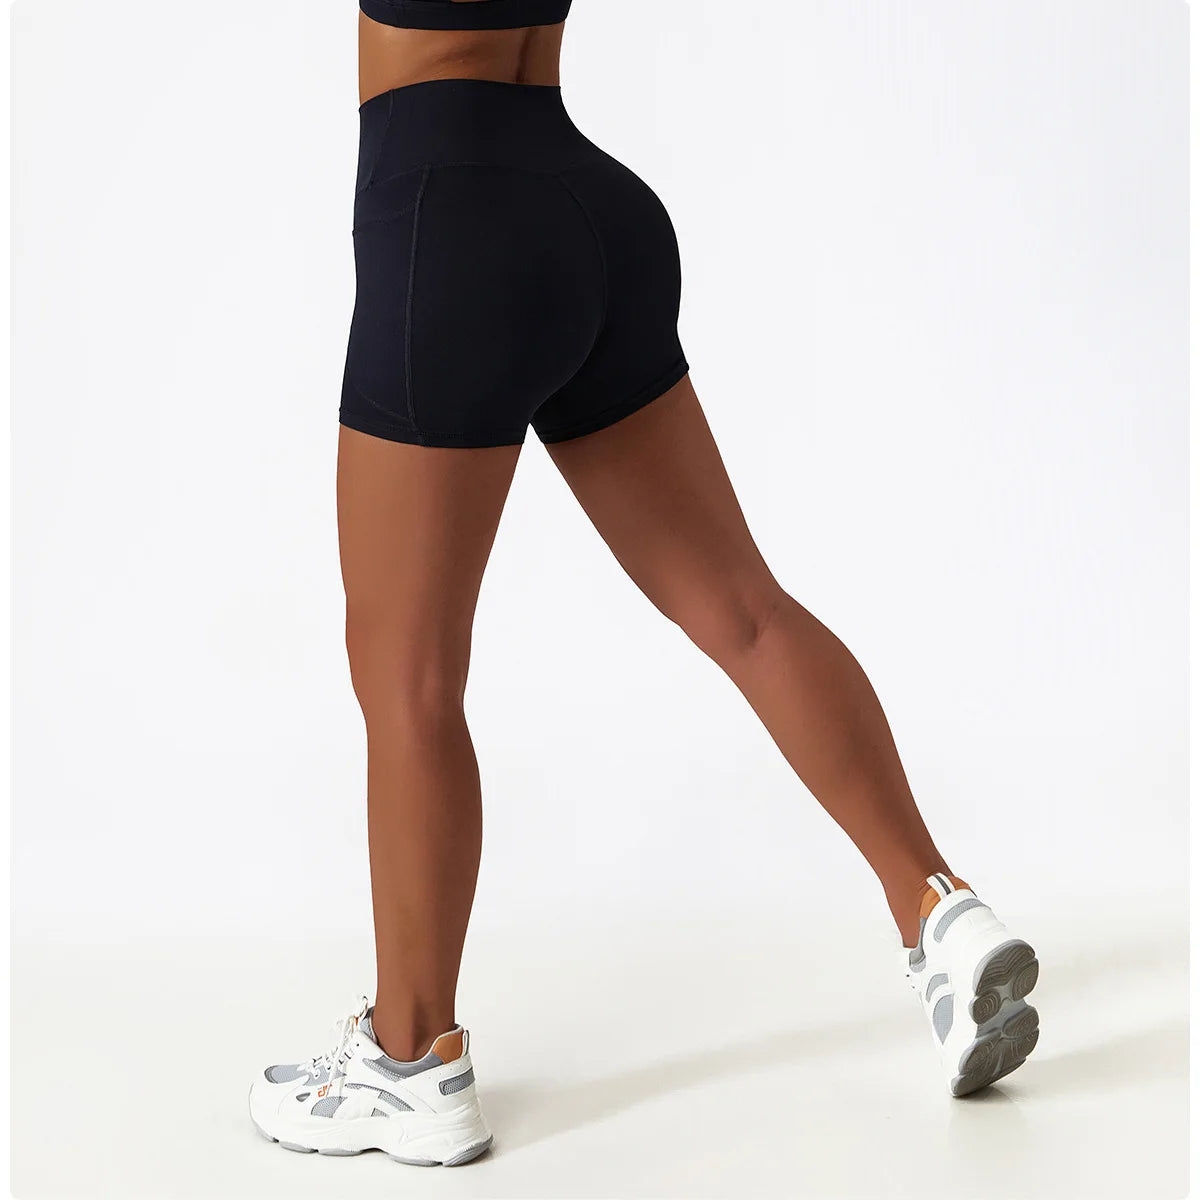 High-Waist-Yoga-Shorts-With-Pockets-Gym-Workout-Running-Fitness-Butt-Lifting-Pants-Women-s-Sweat.webp